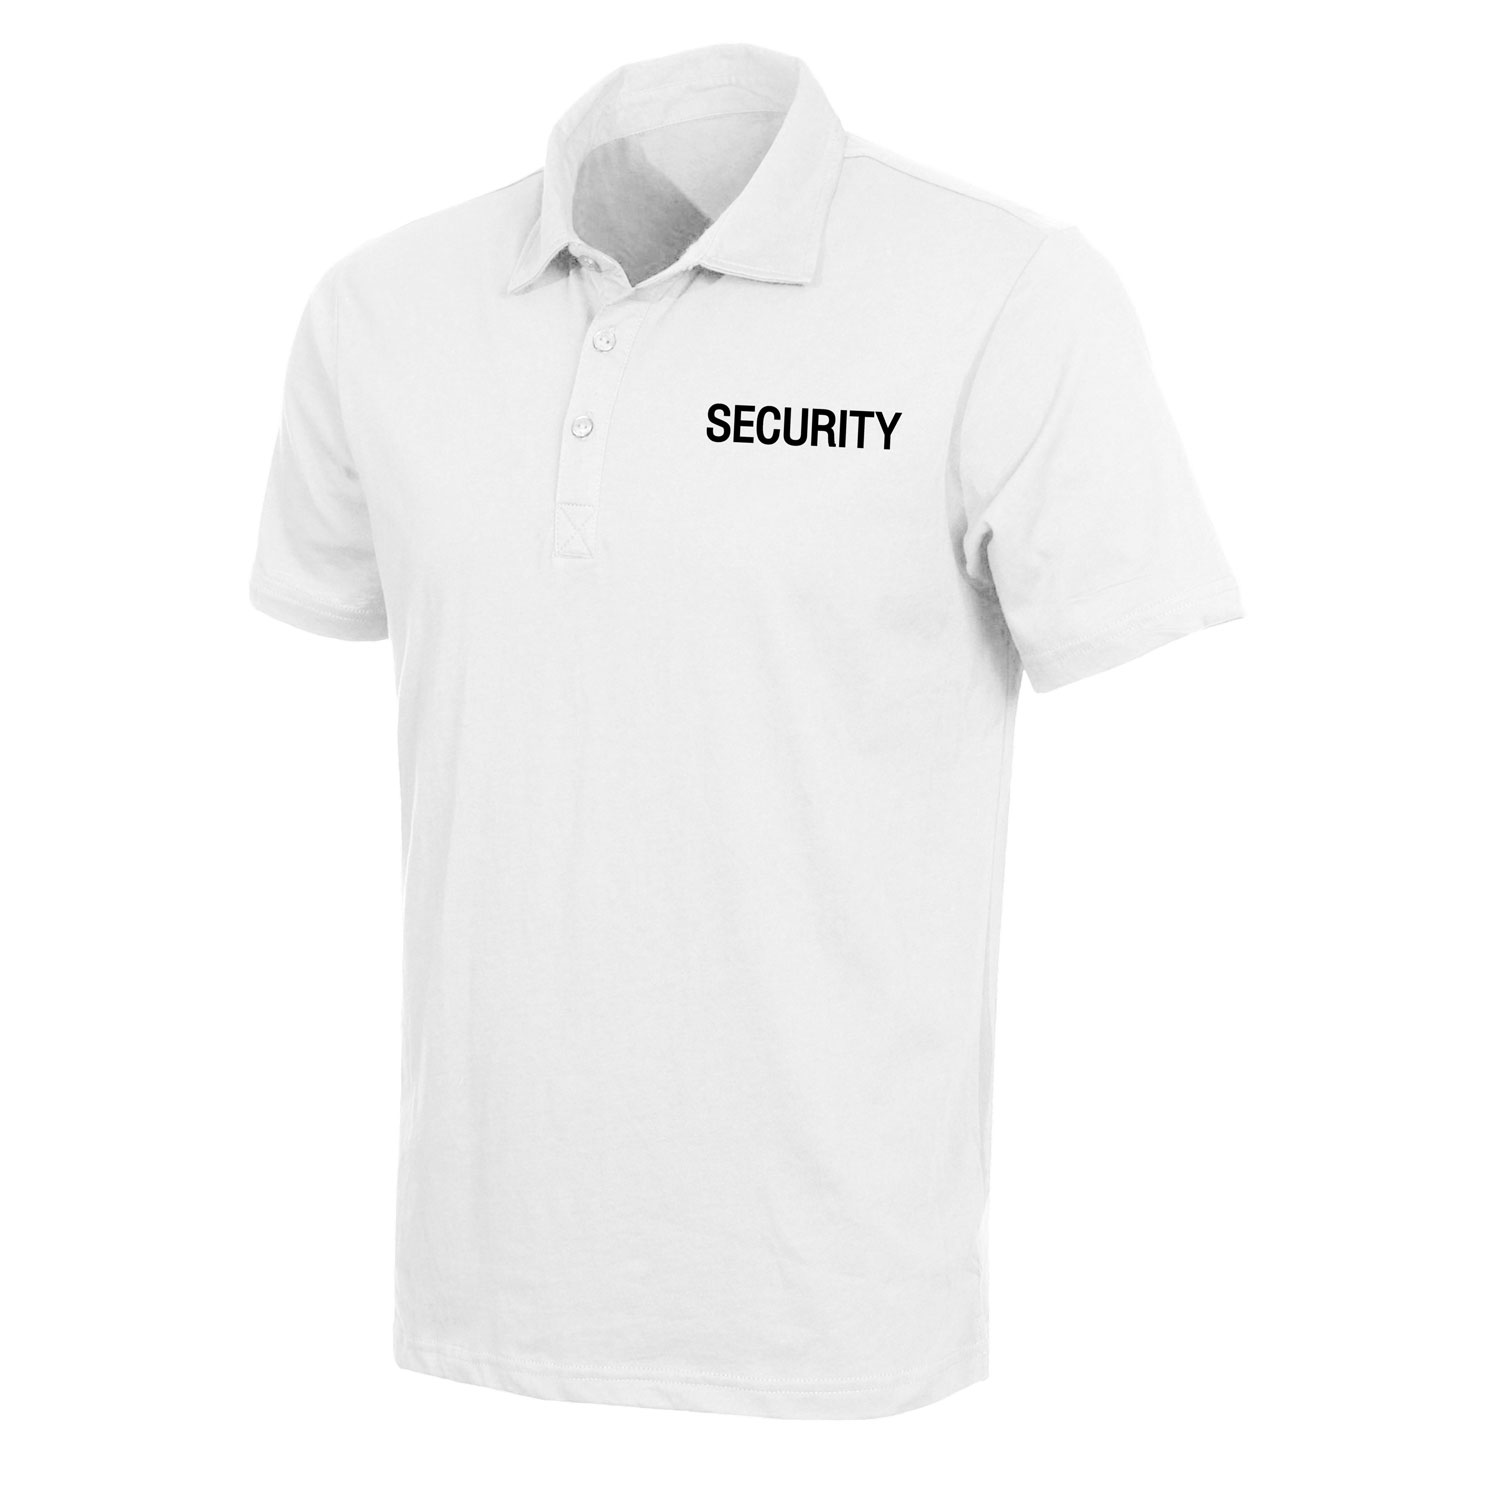 Rothco Moisture Wicking Security Polo Shirt